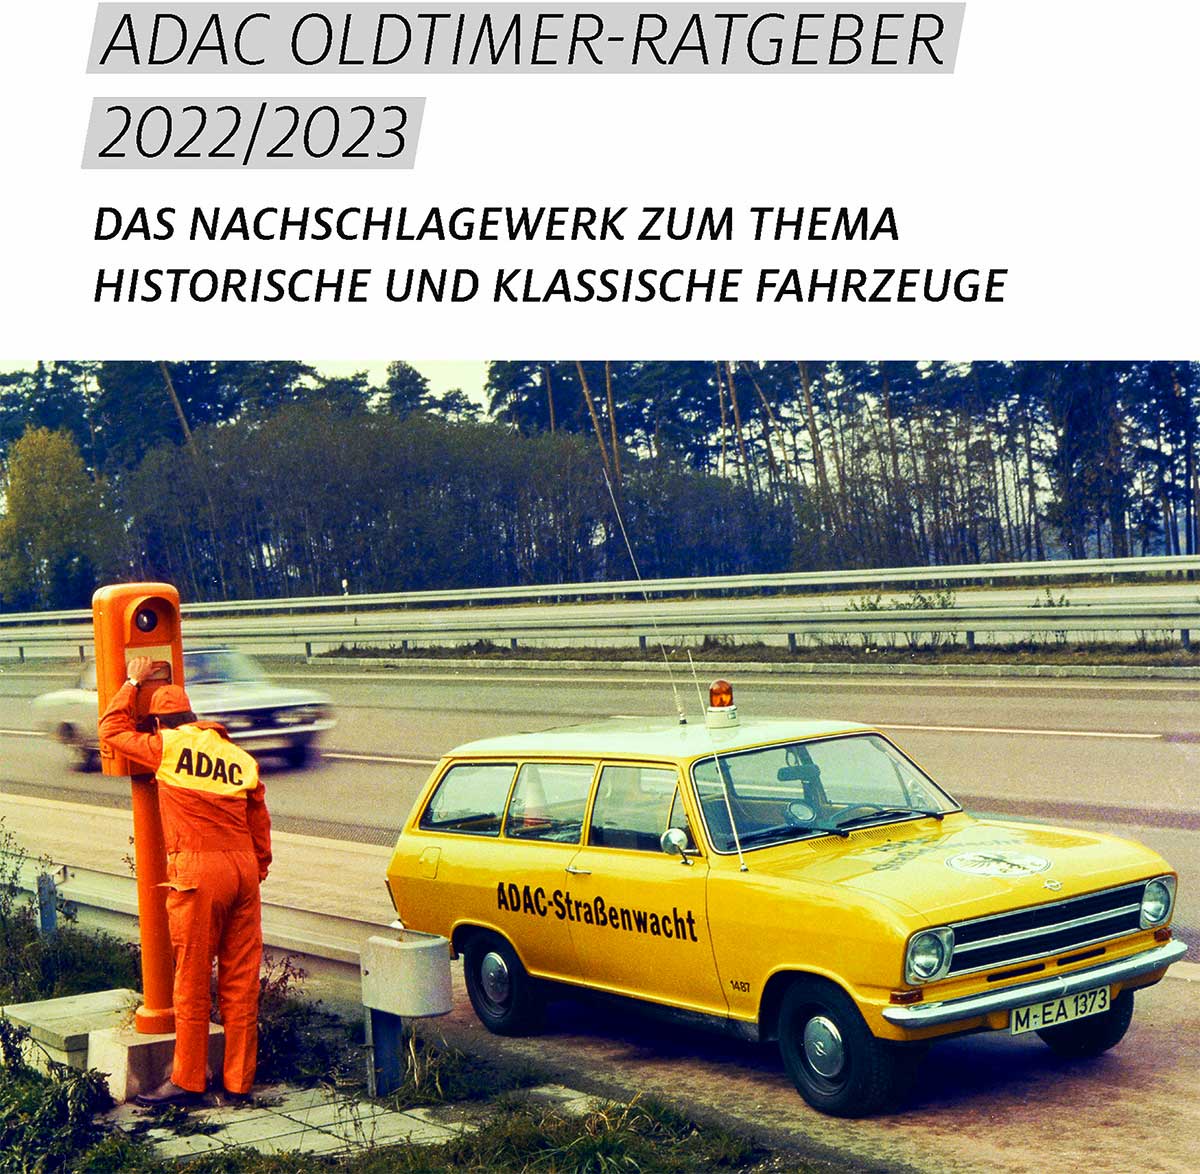 ADAC Oldtimer-Ratgeber 2022/2023